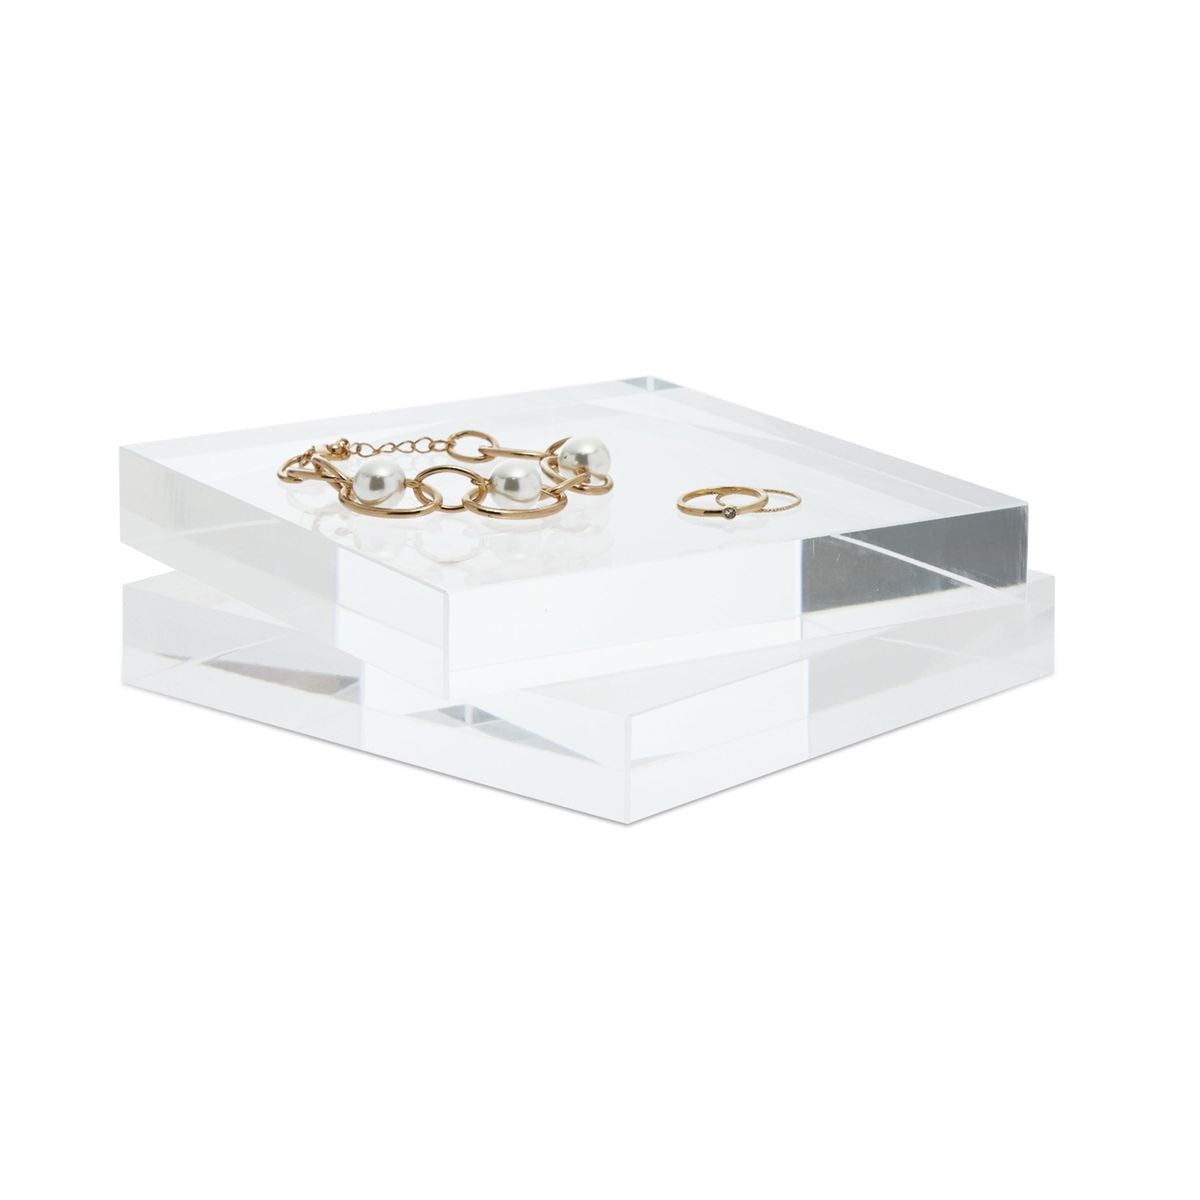 6x Clear Acrylic Risers Stand Shelf window counter display Jewelry Gift Showcase 